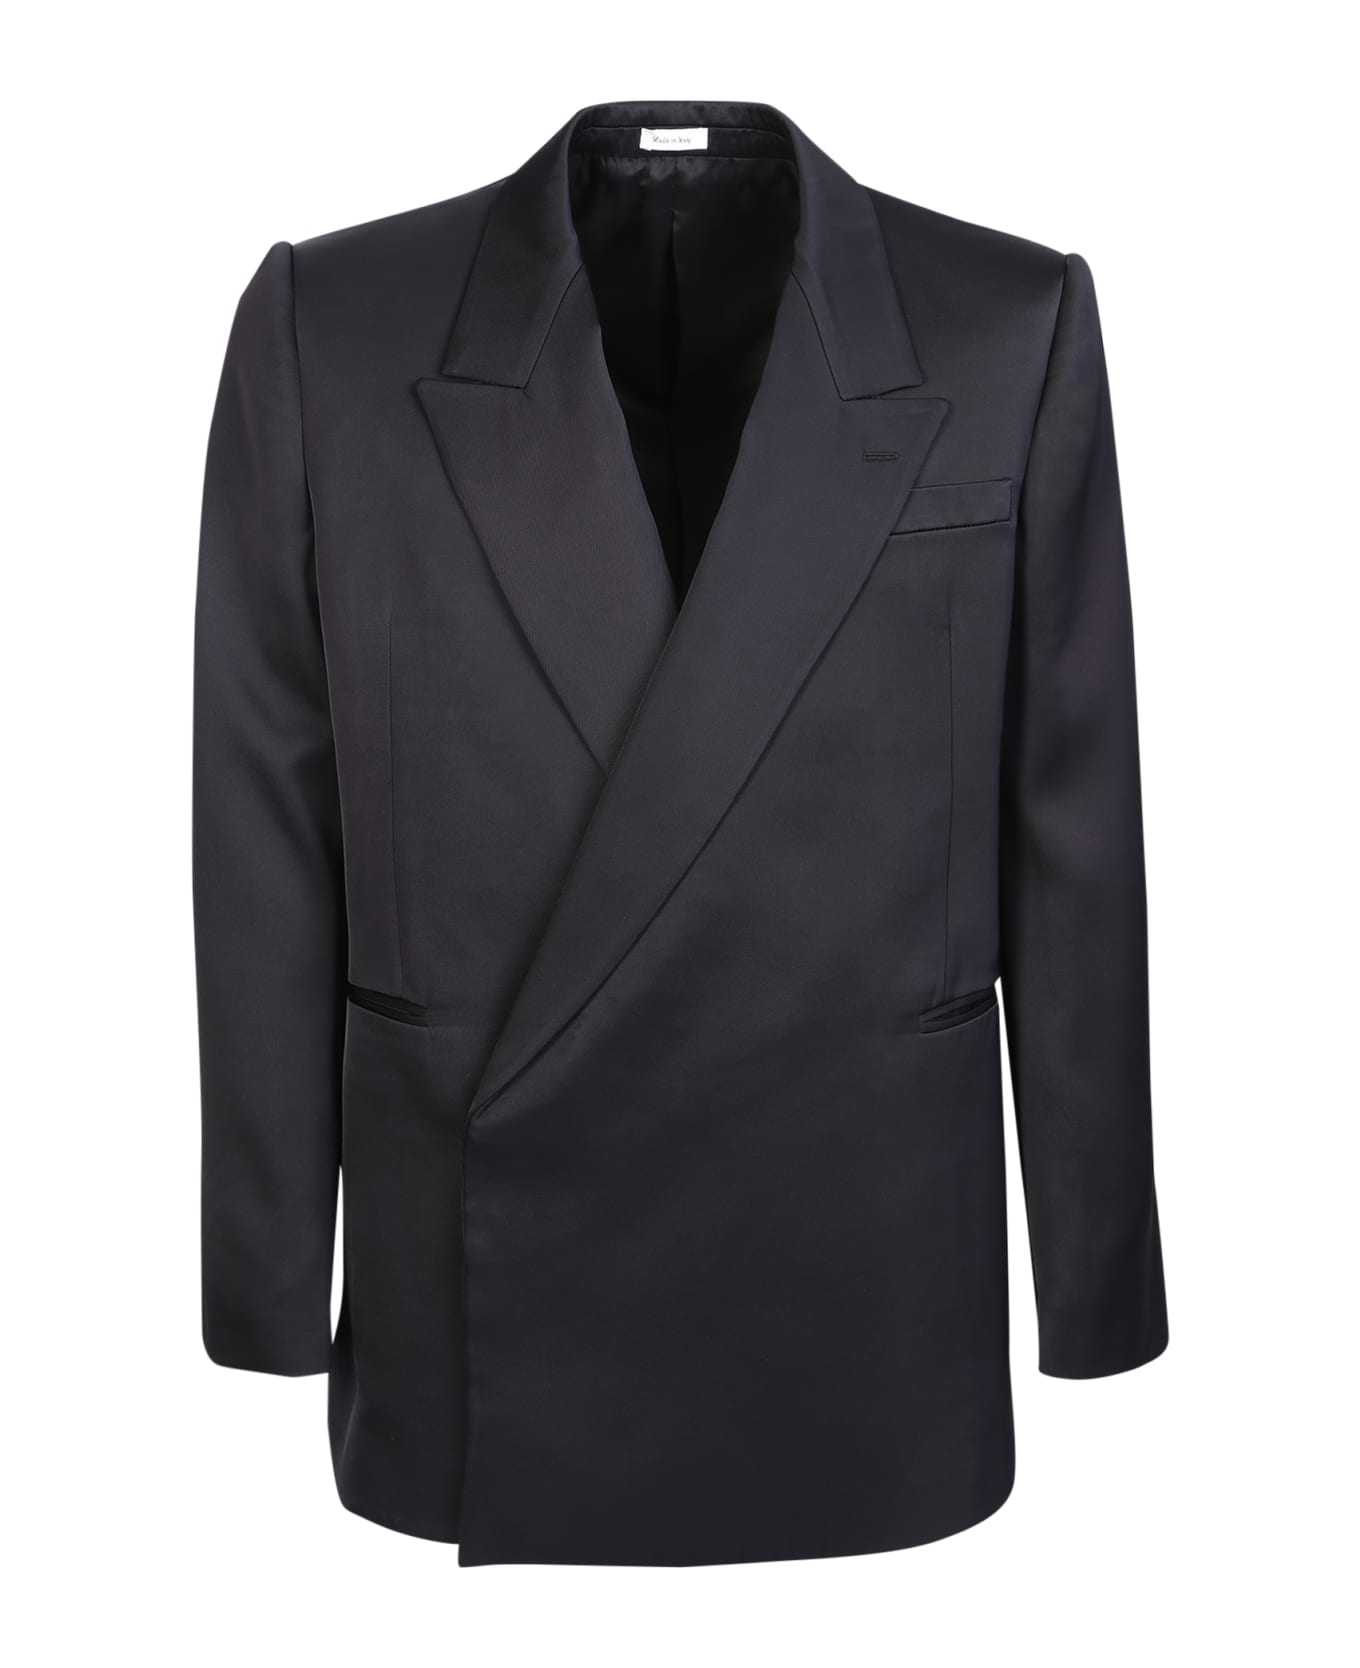 Alexander McQueen Wrapped Design Black Jacket - Black スーツ